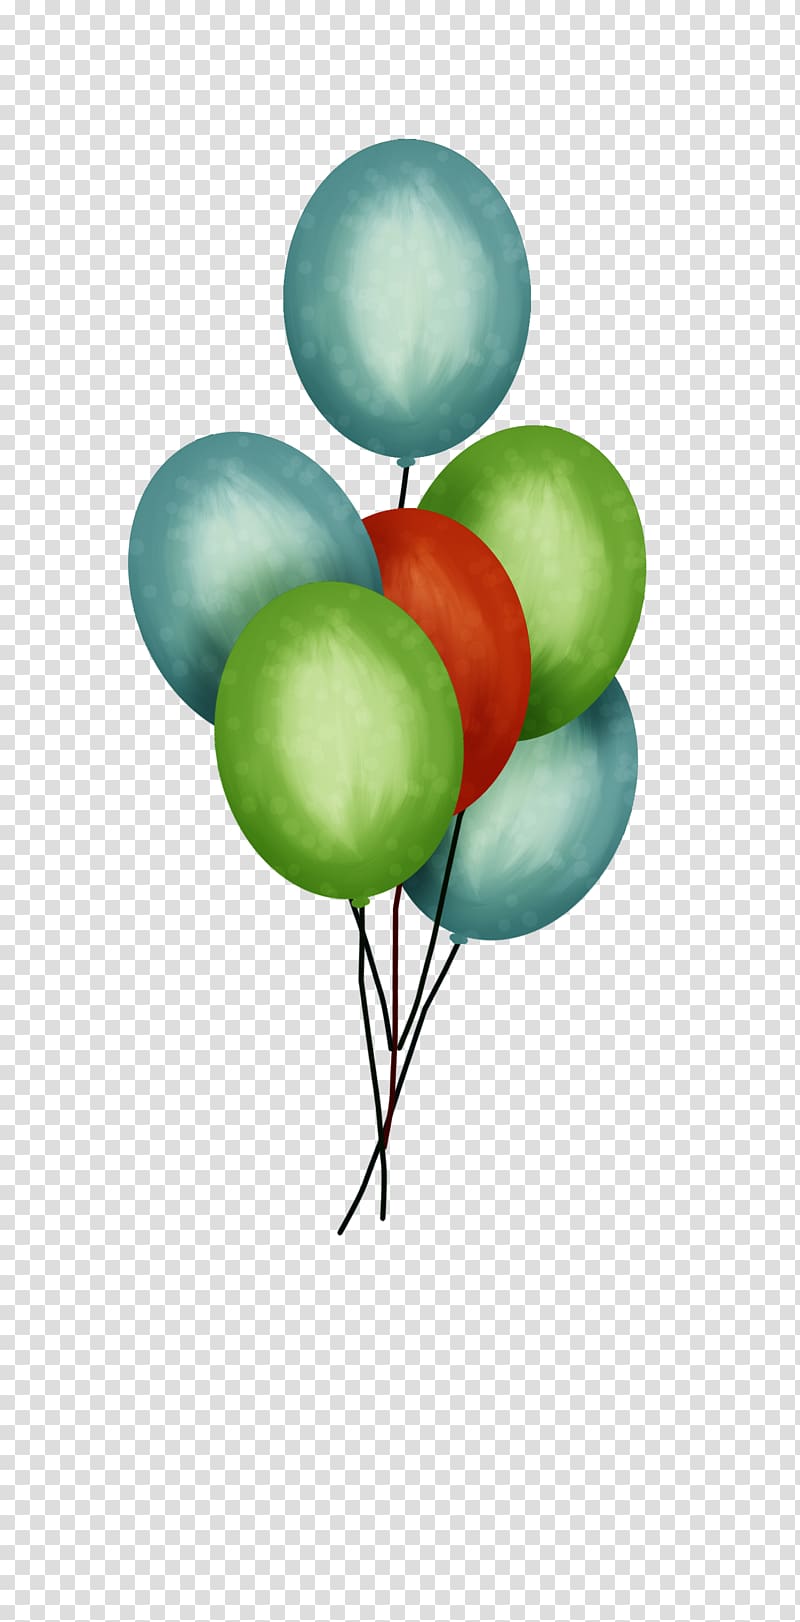 Balloon Drawing Cartoon, Pretty cartoon balloon transparent background PNG clipart